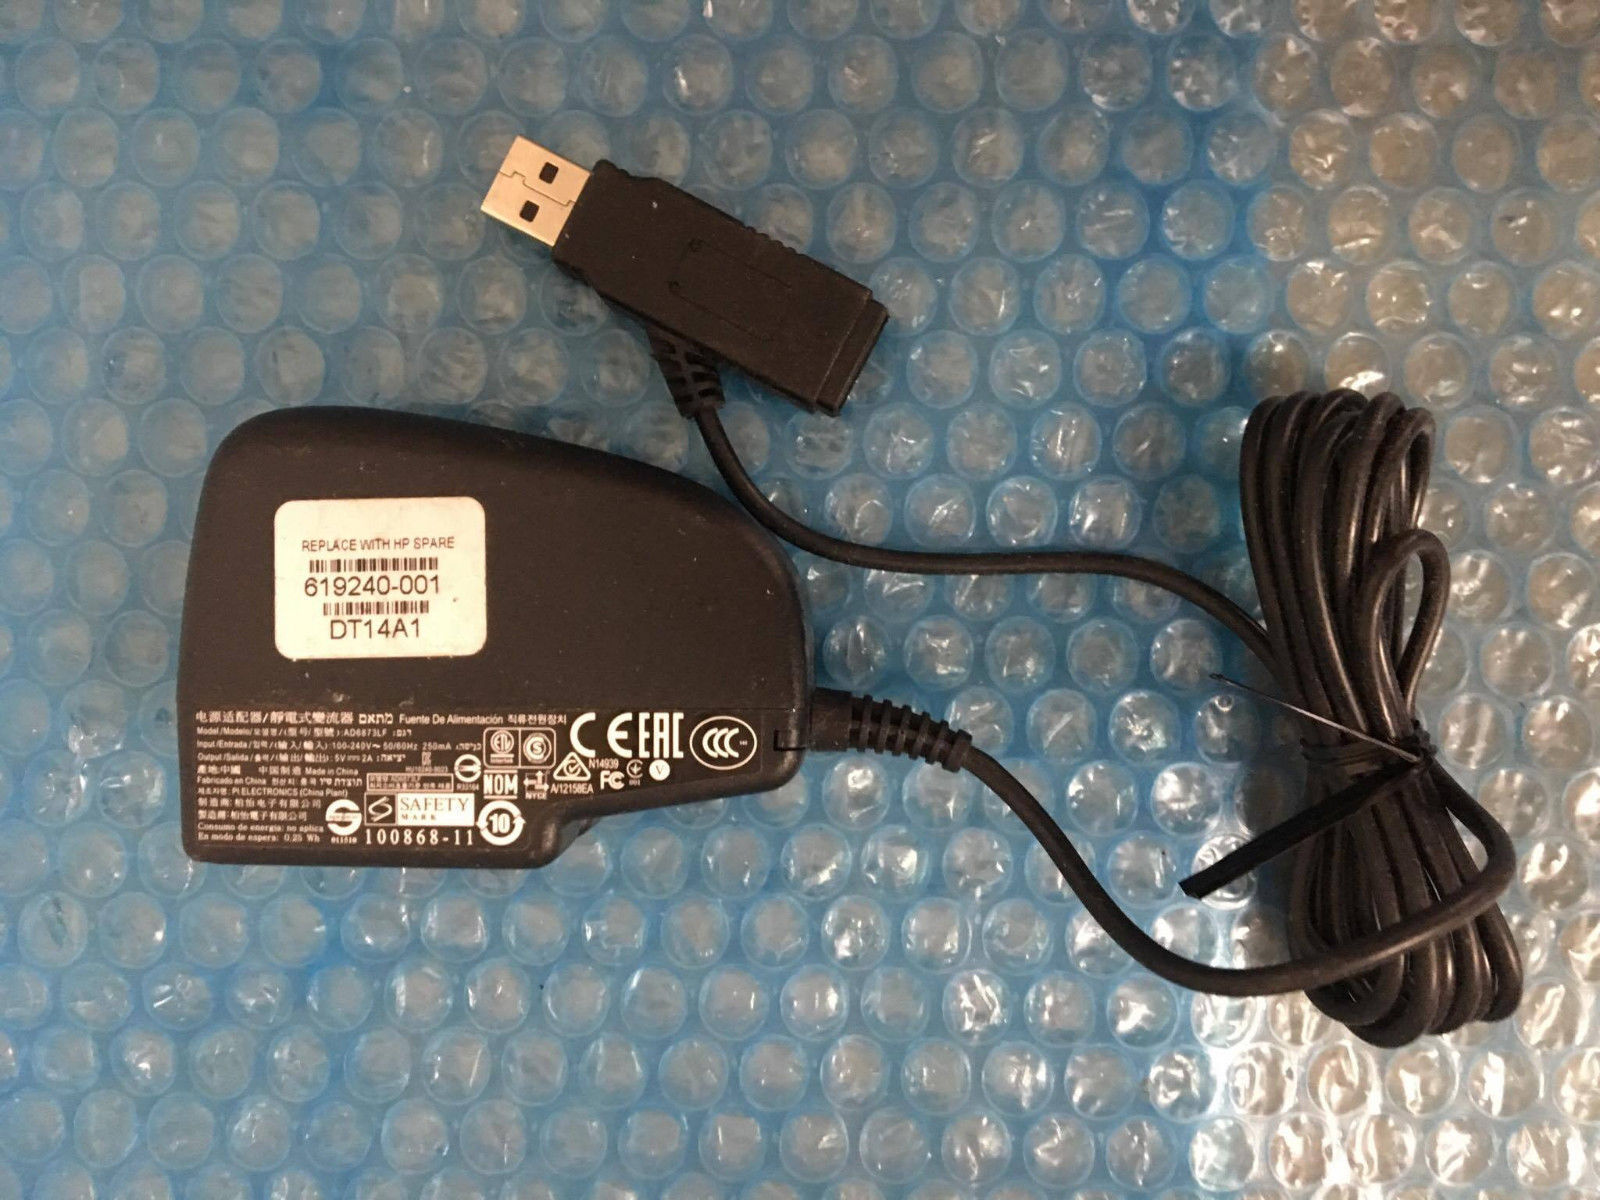 Genuine HP Compaq 5V 2A Input USB Output Power Adapter P/N 619240-001